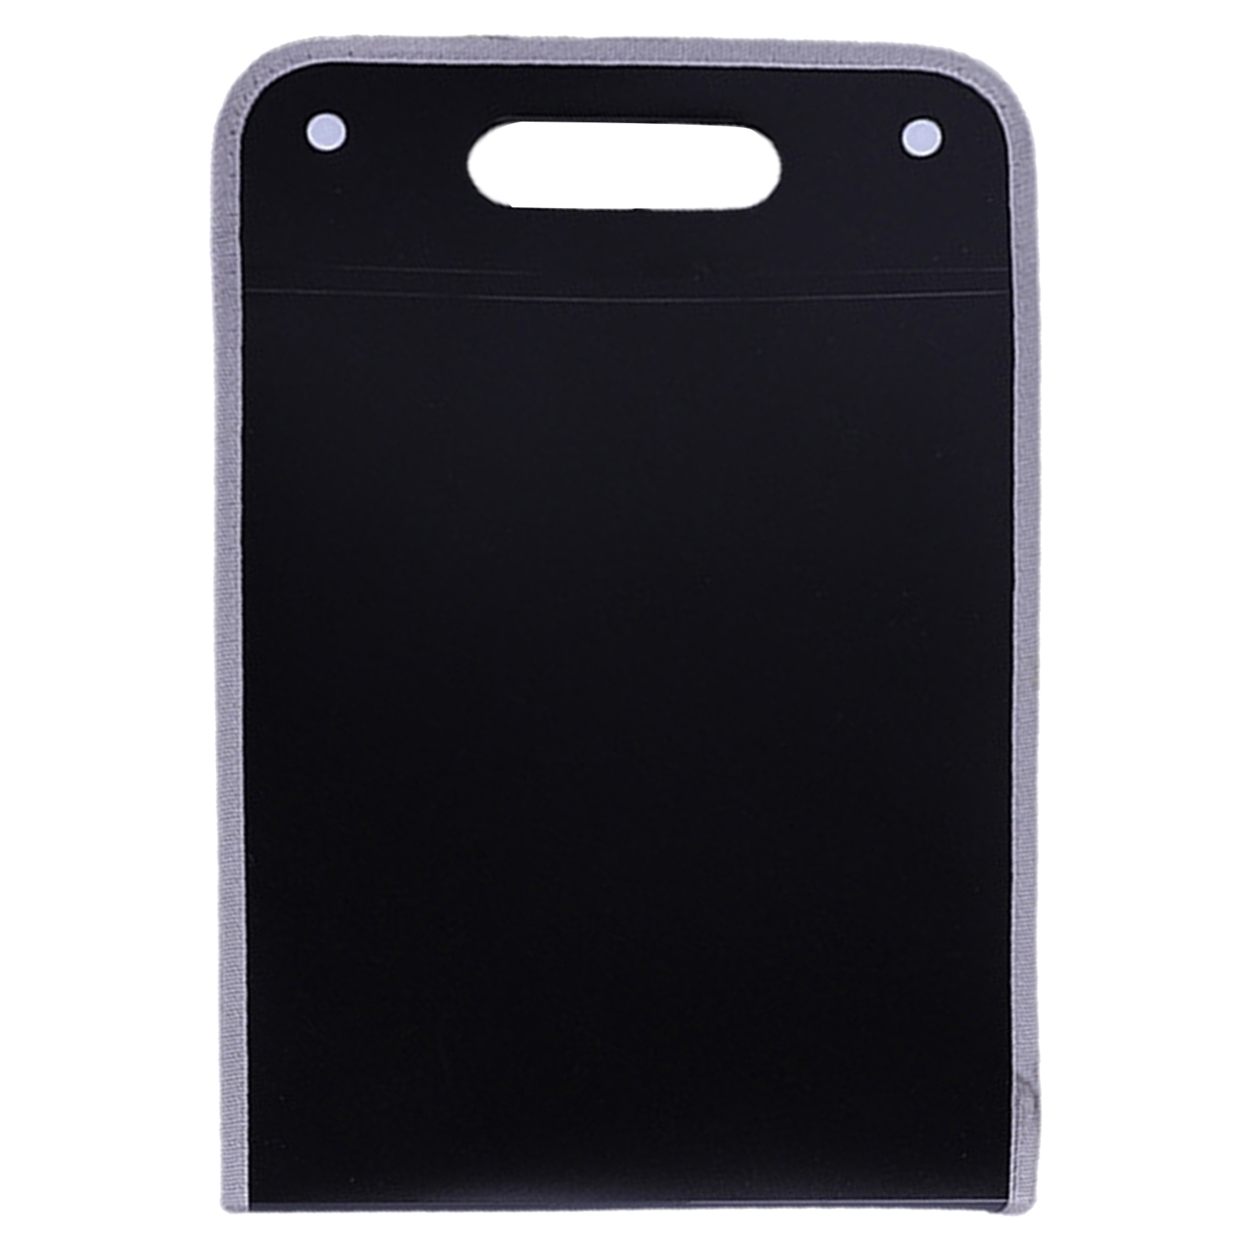 13 Grids Accordions Folder Handheld Expandable Multi-layer Universal Paper Files Folder Stationery Supplies - black